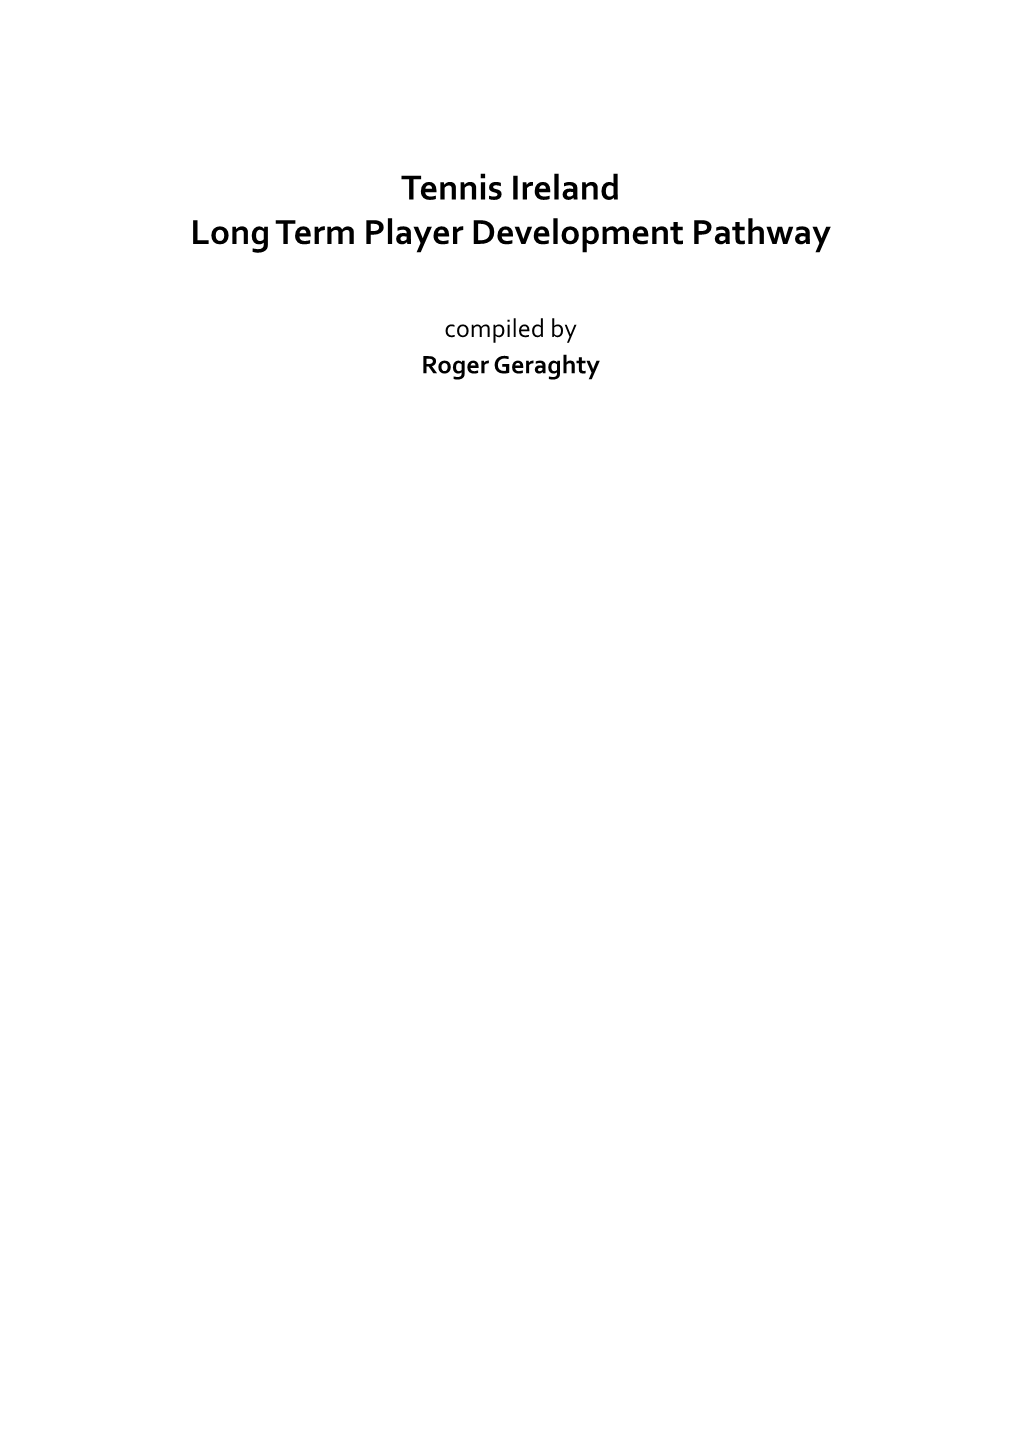 Tennis Ireland Long Term Player Development Pathway